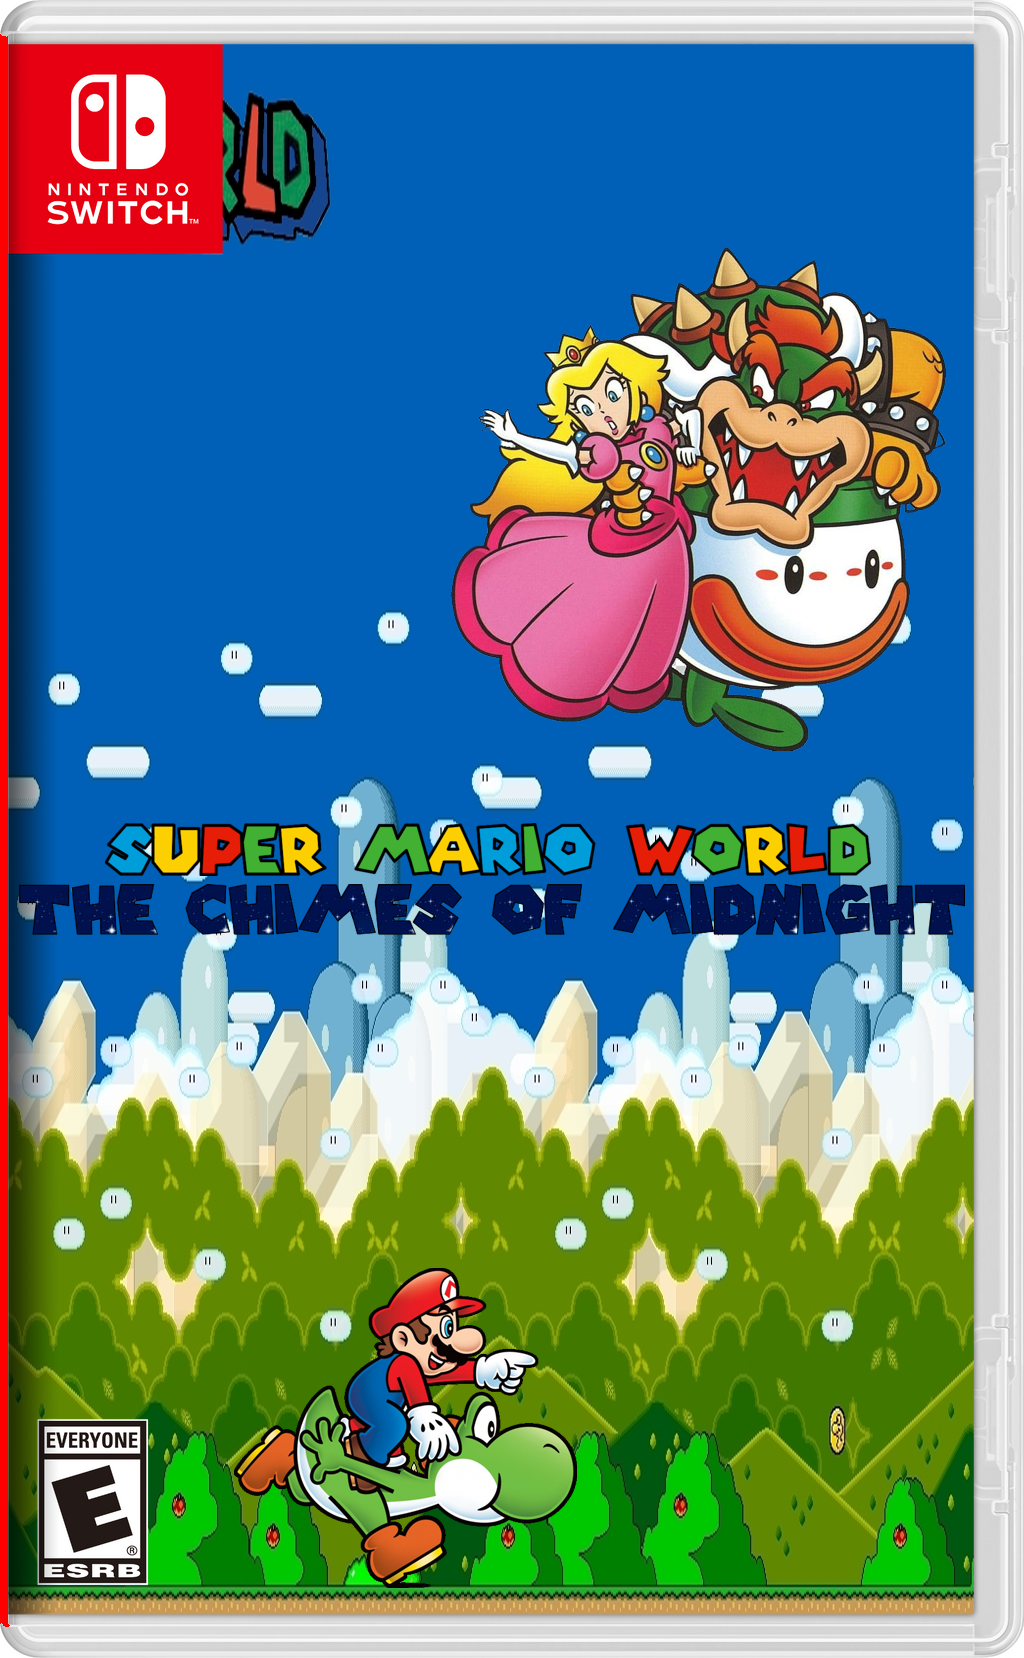 Super Mario Run Switch, Fantendo - Game Ideas & More